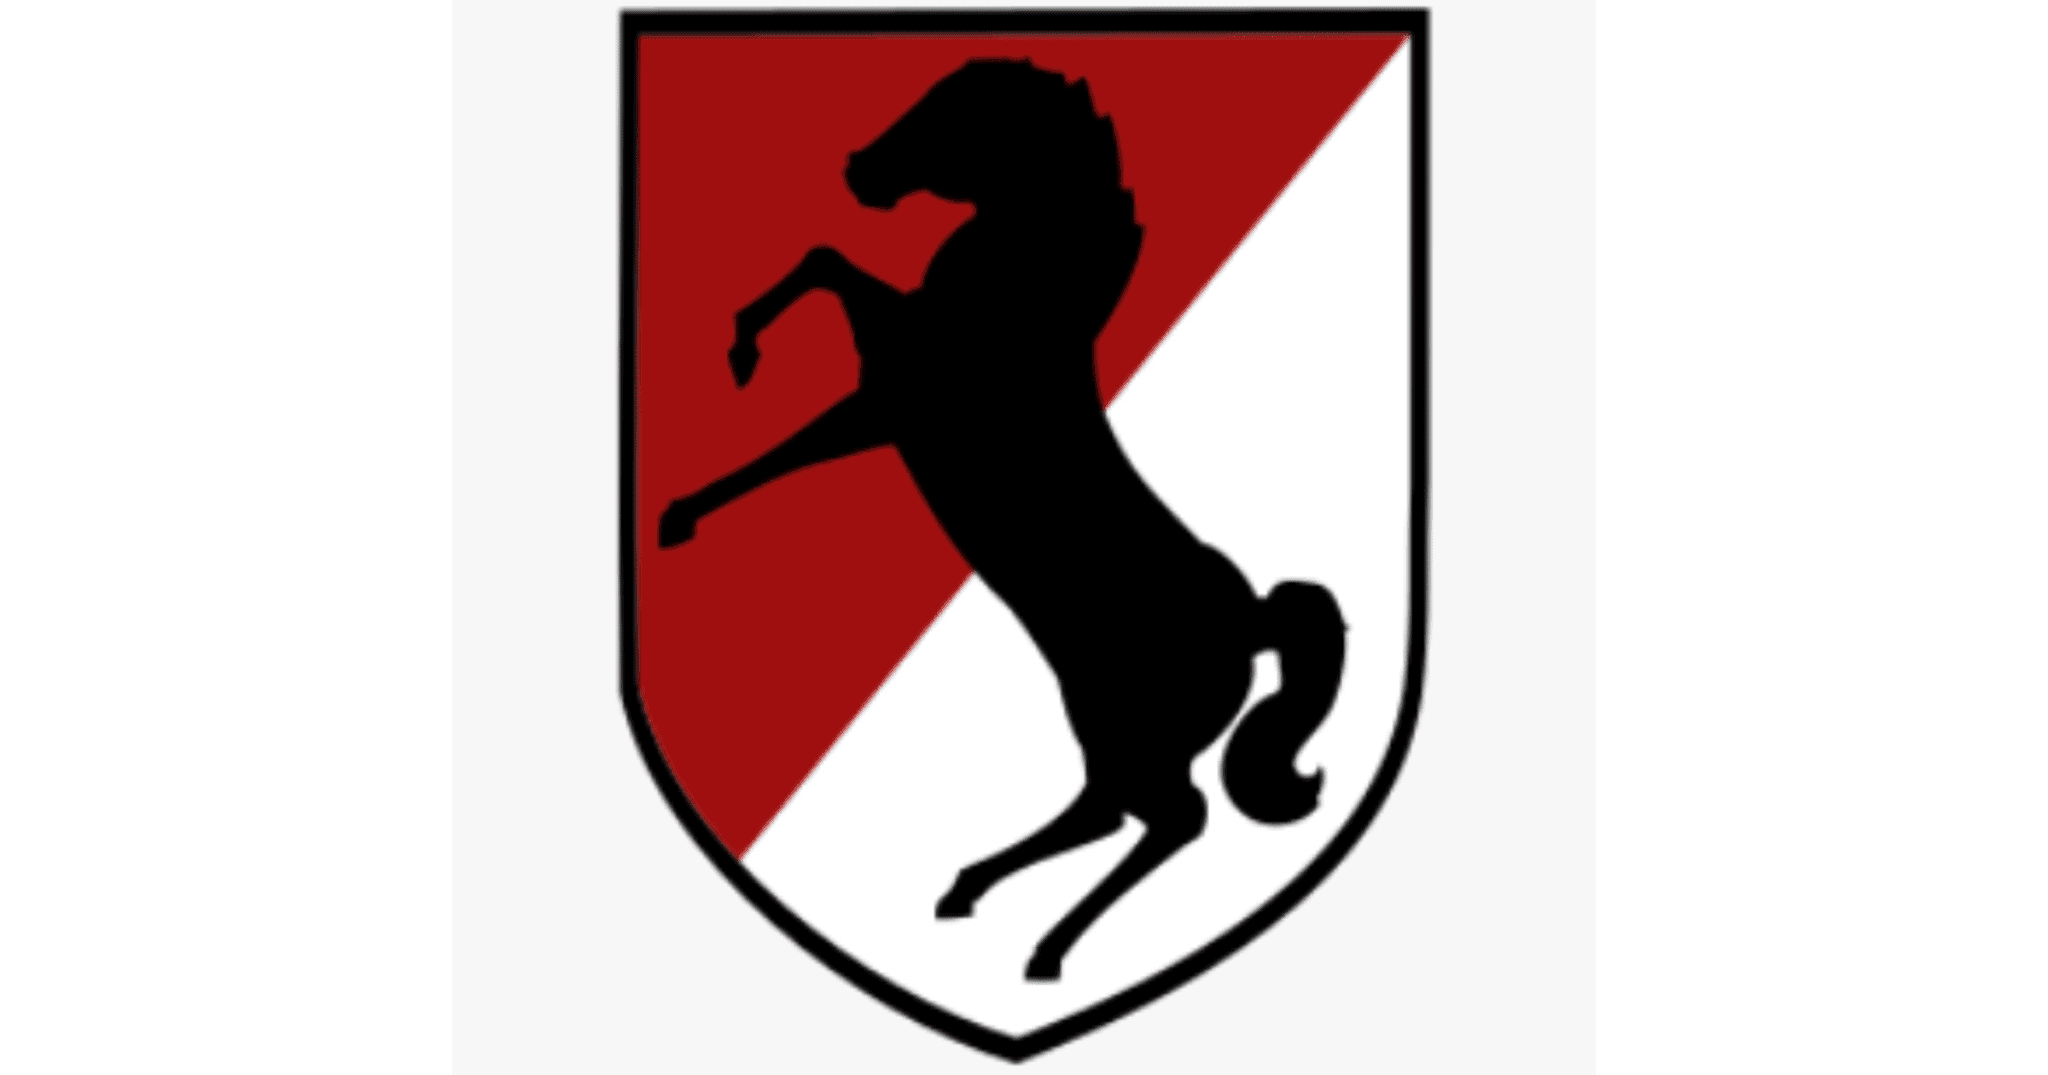 an image of the Blackhorse emblem